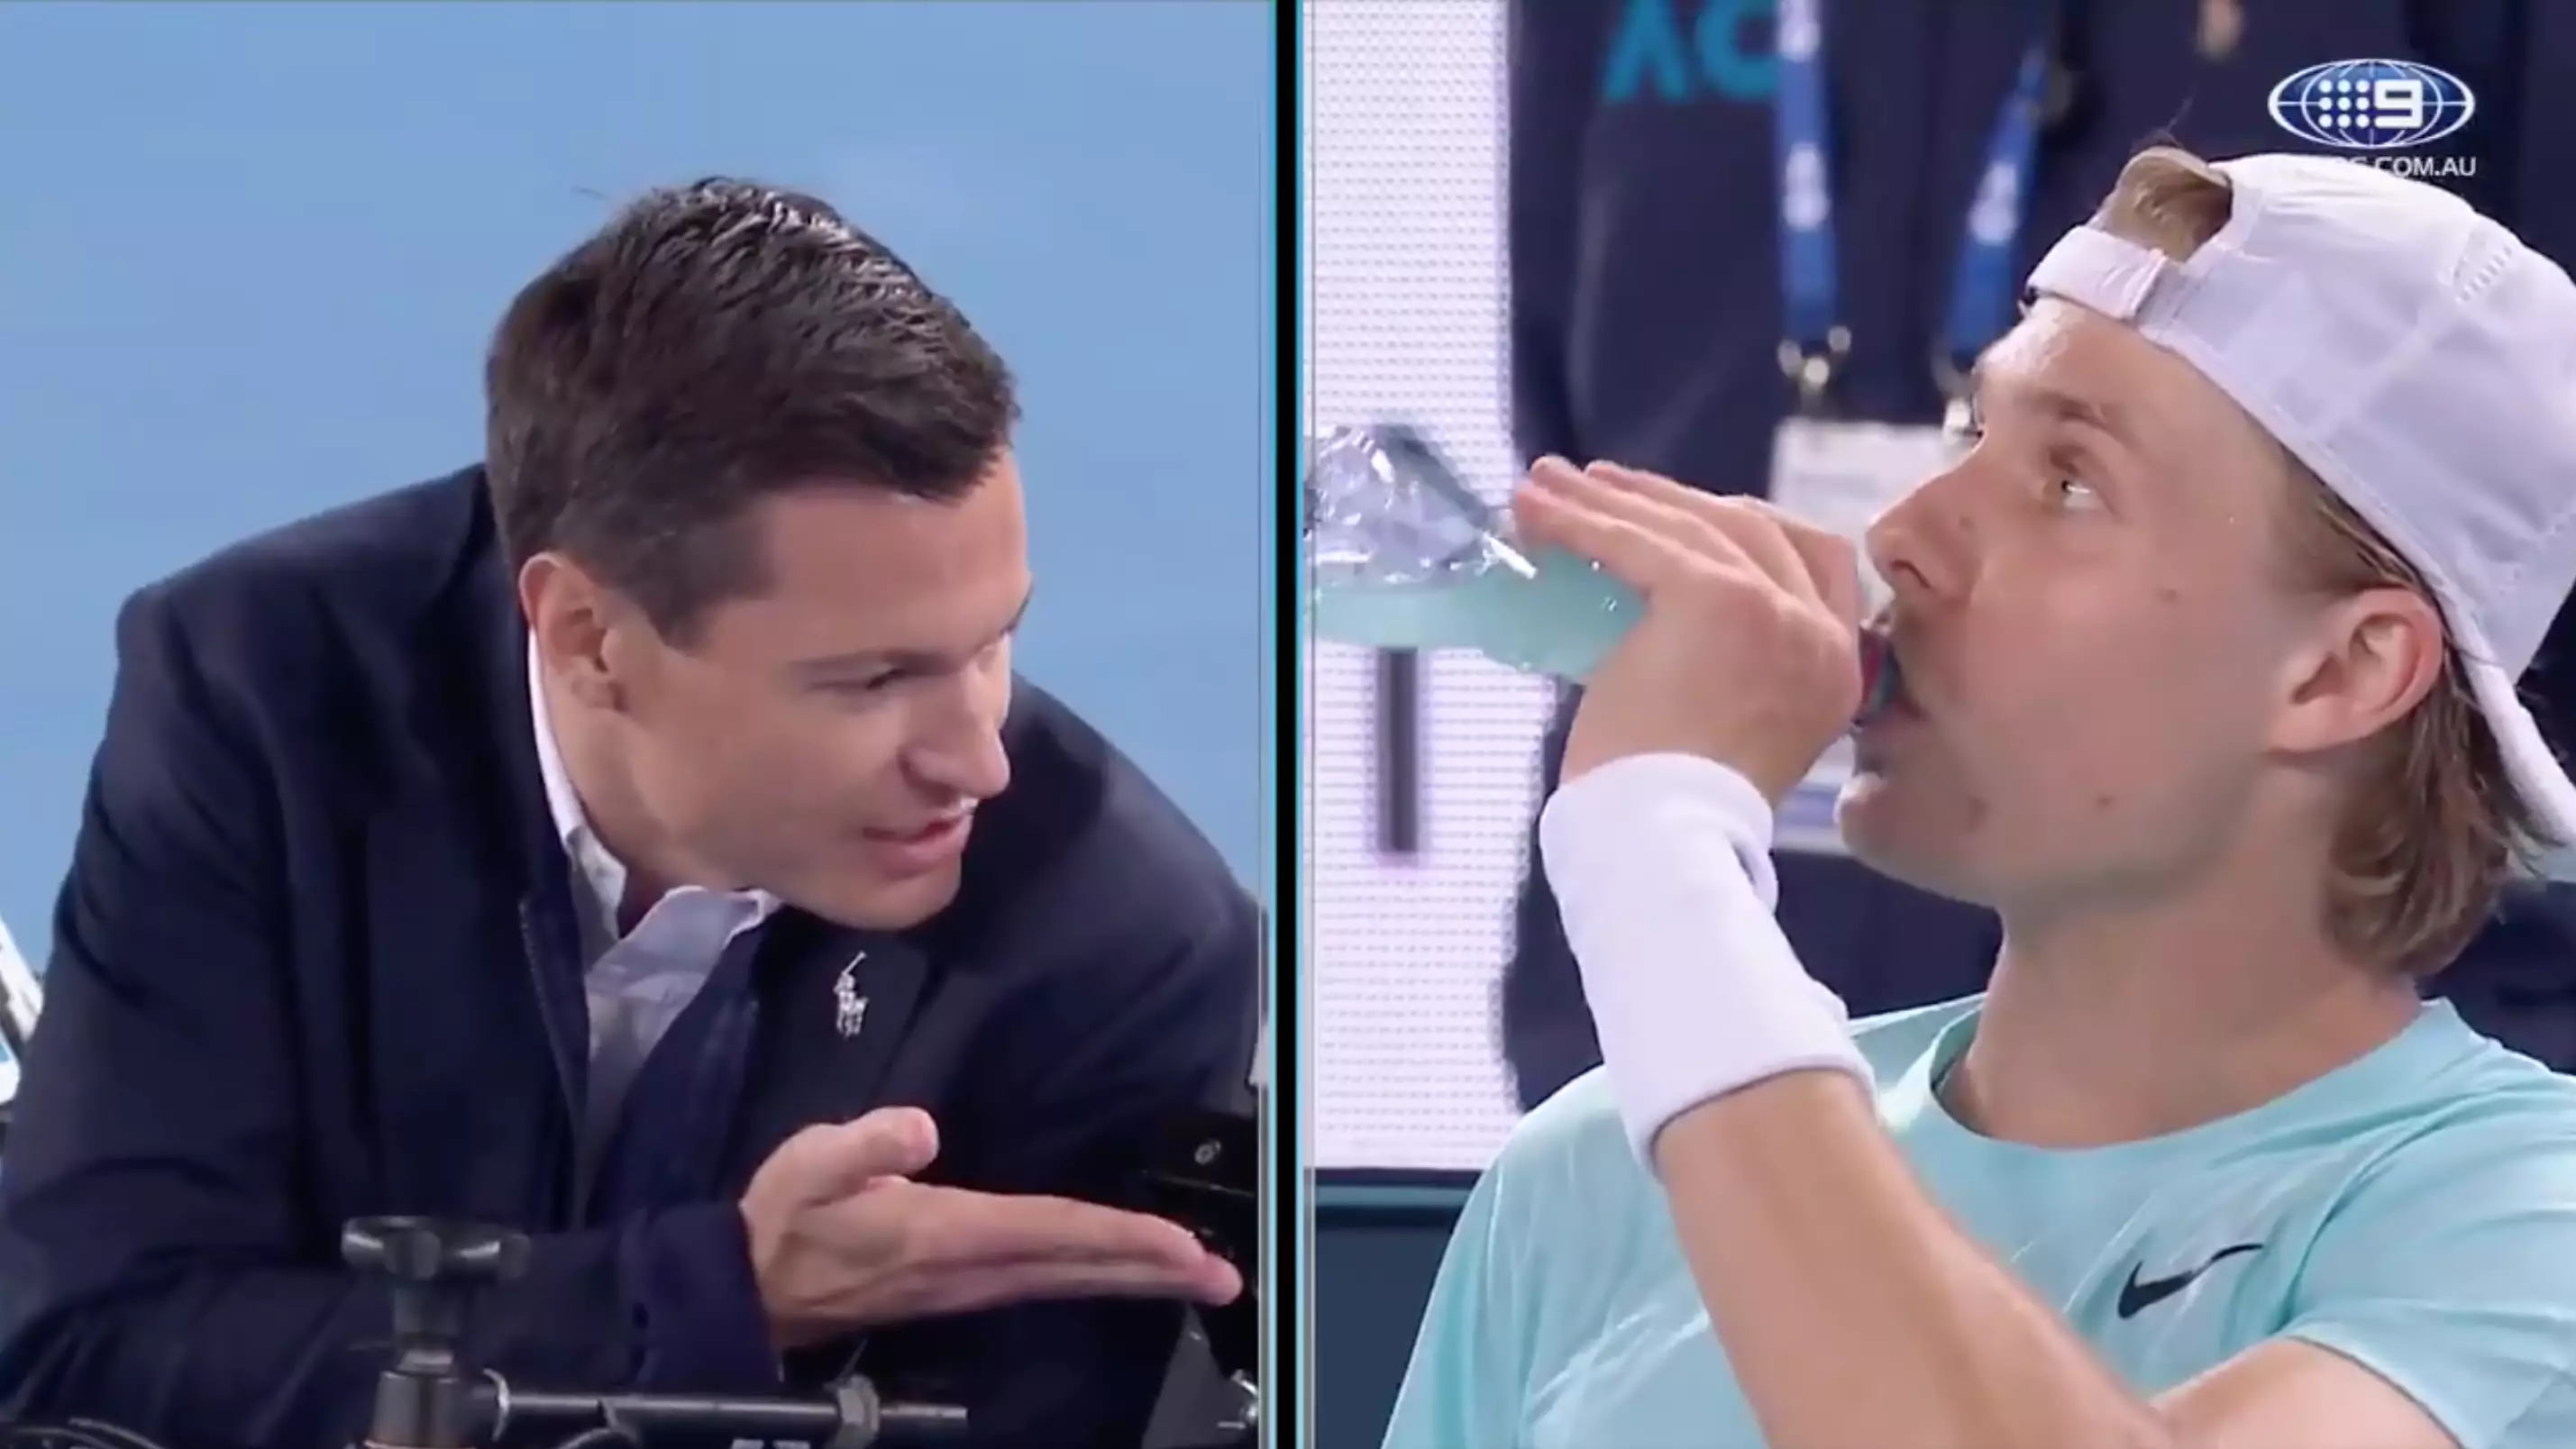 Denis Shapovalov Threatens To 'P*** In A Bottle' During Australian Open Match